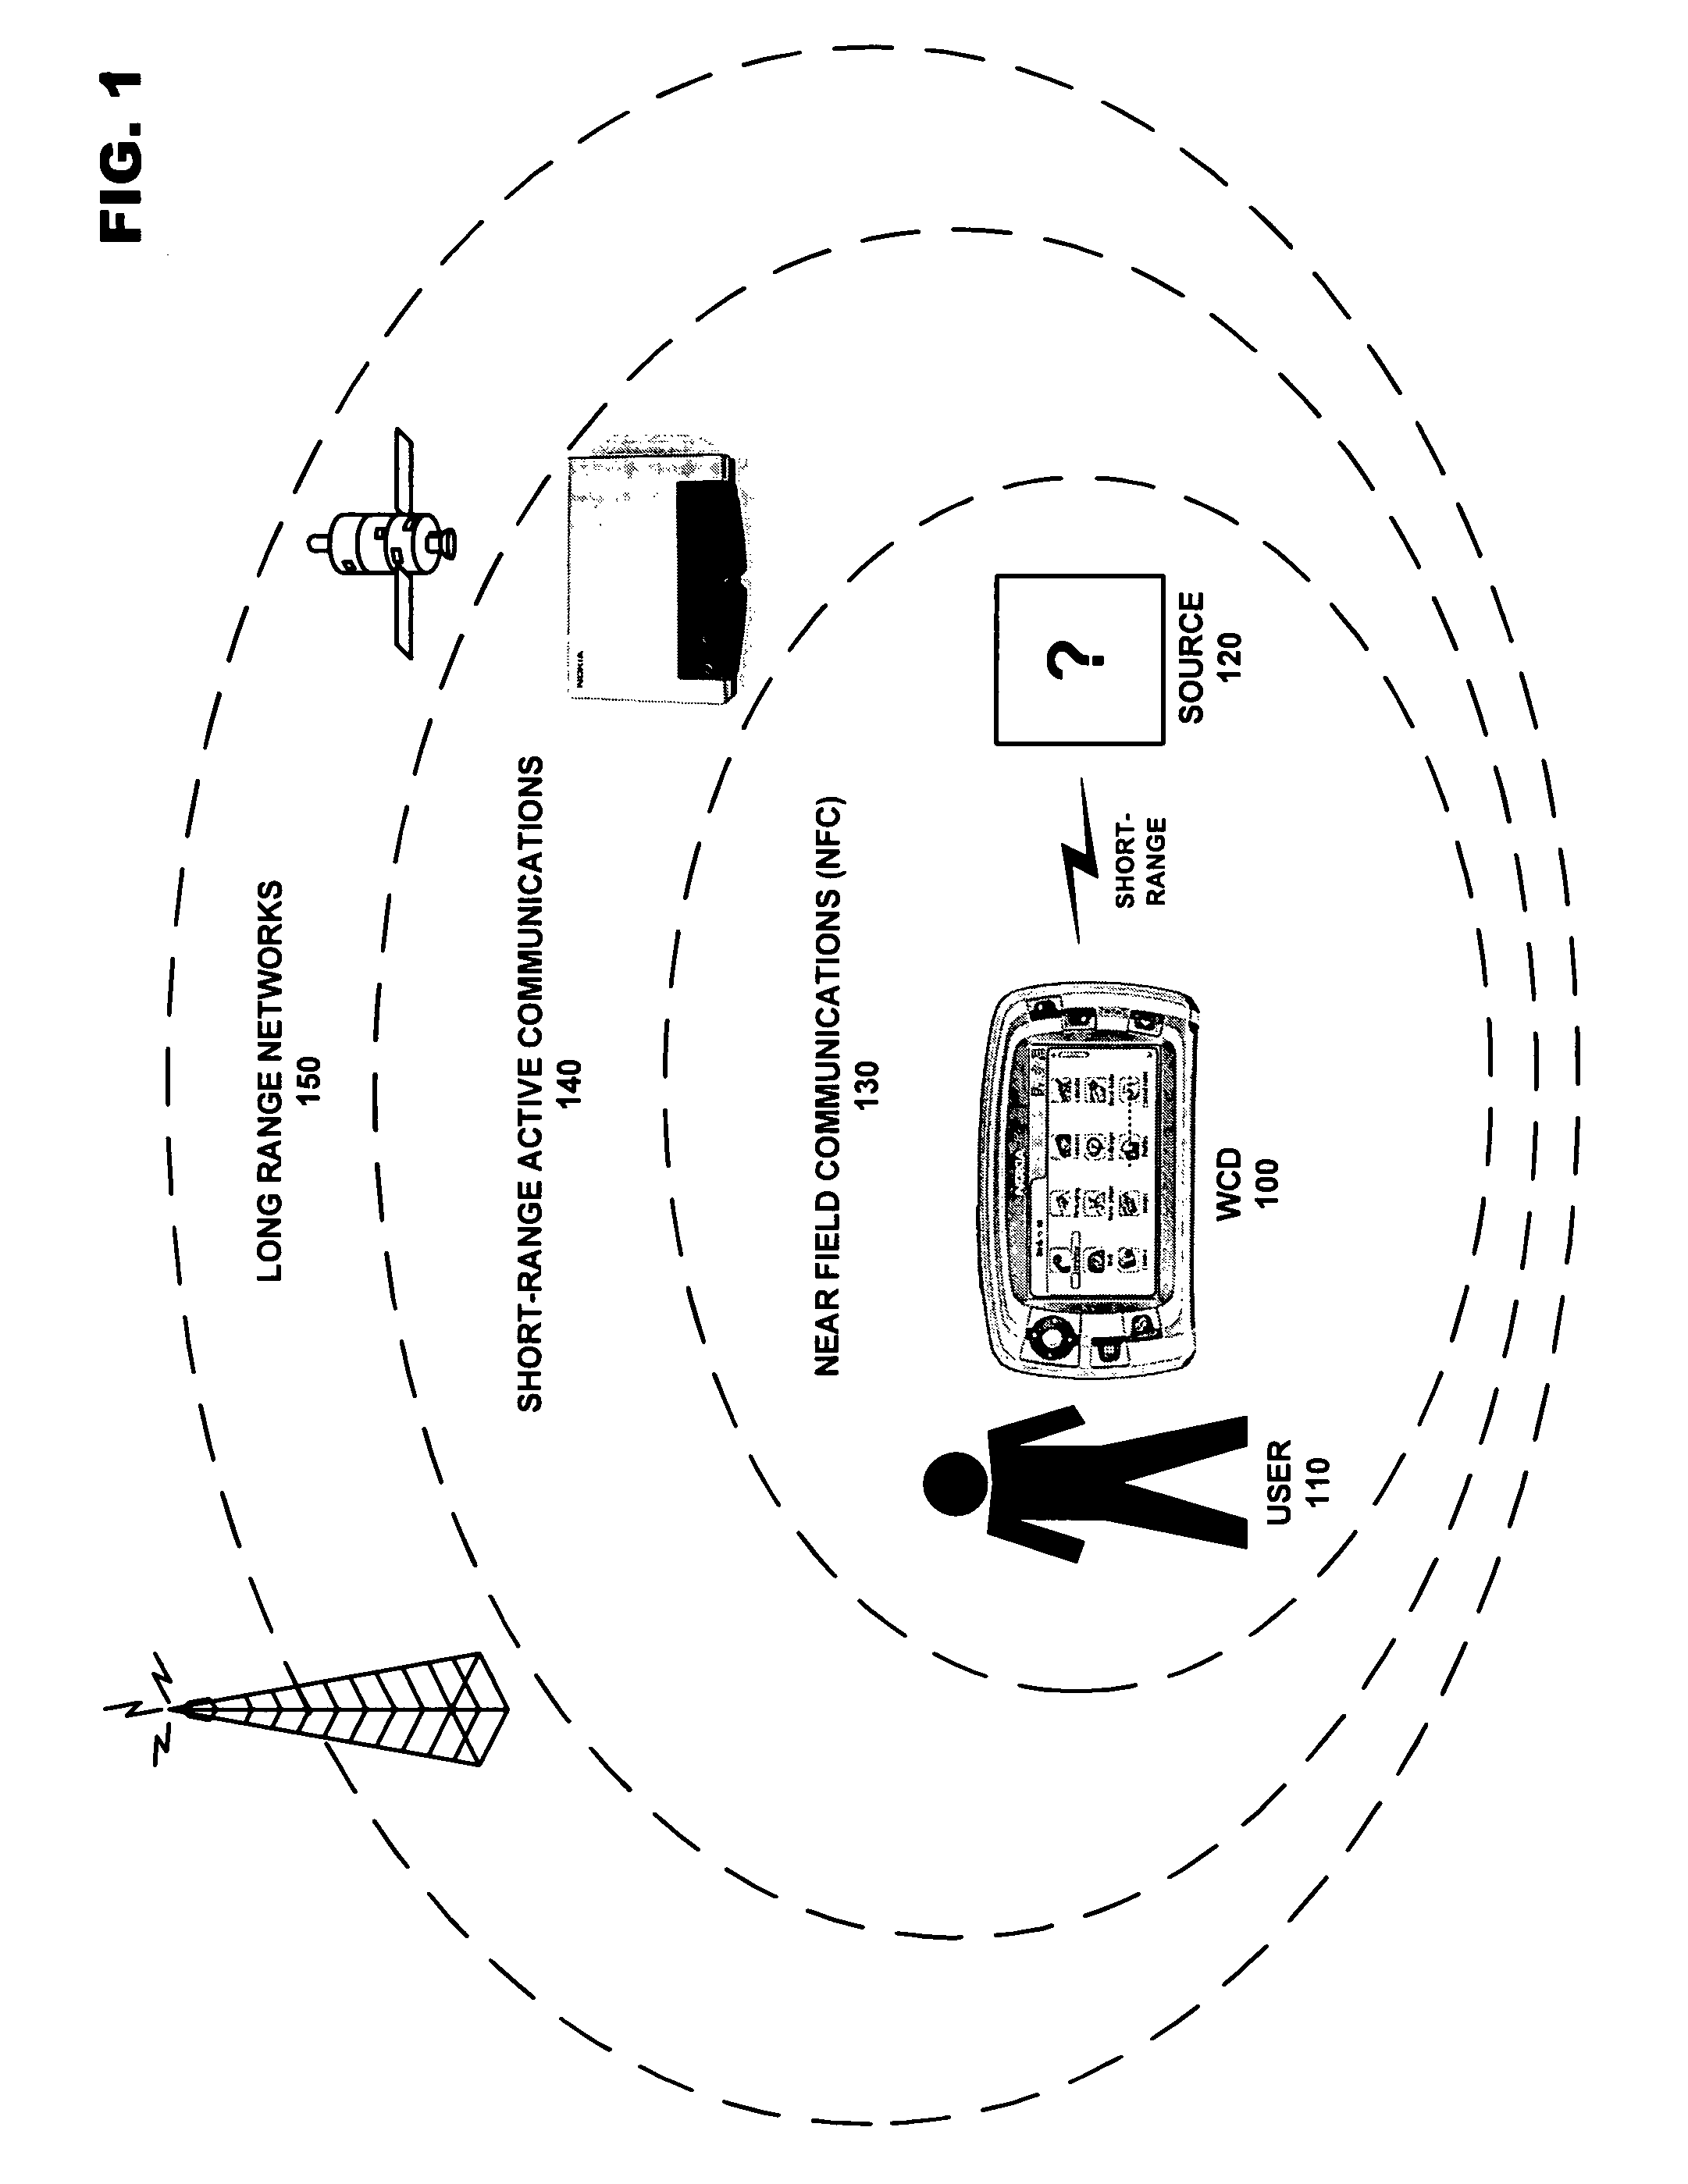 Distributed multiradio controller